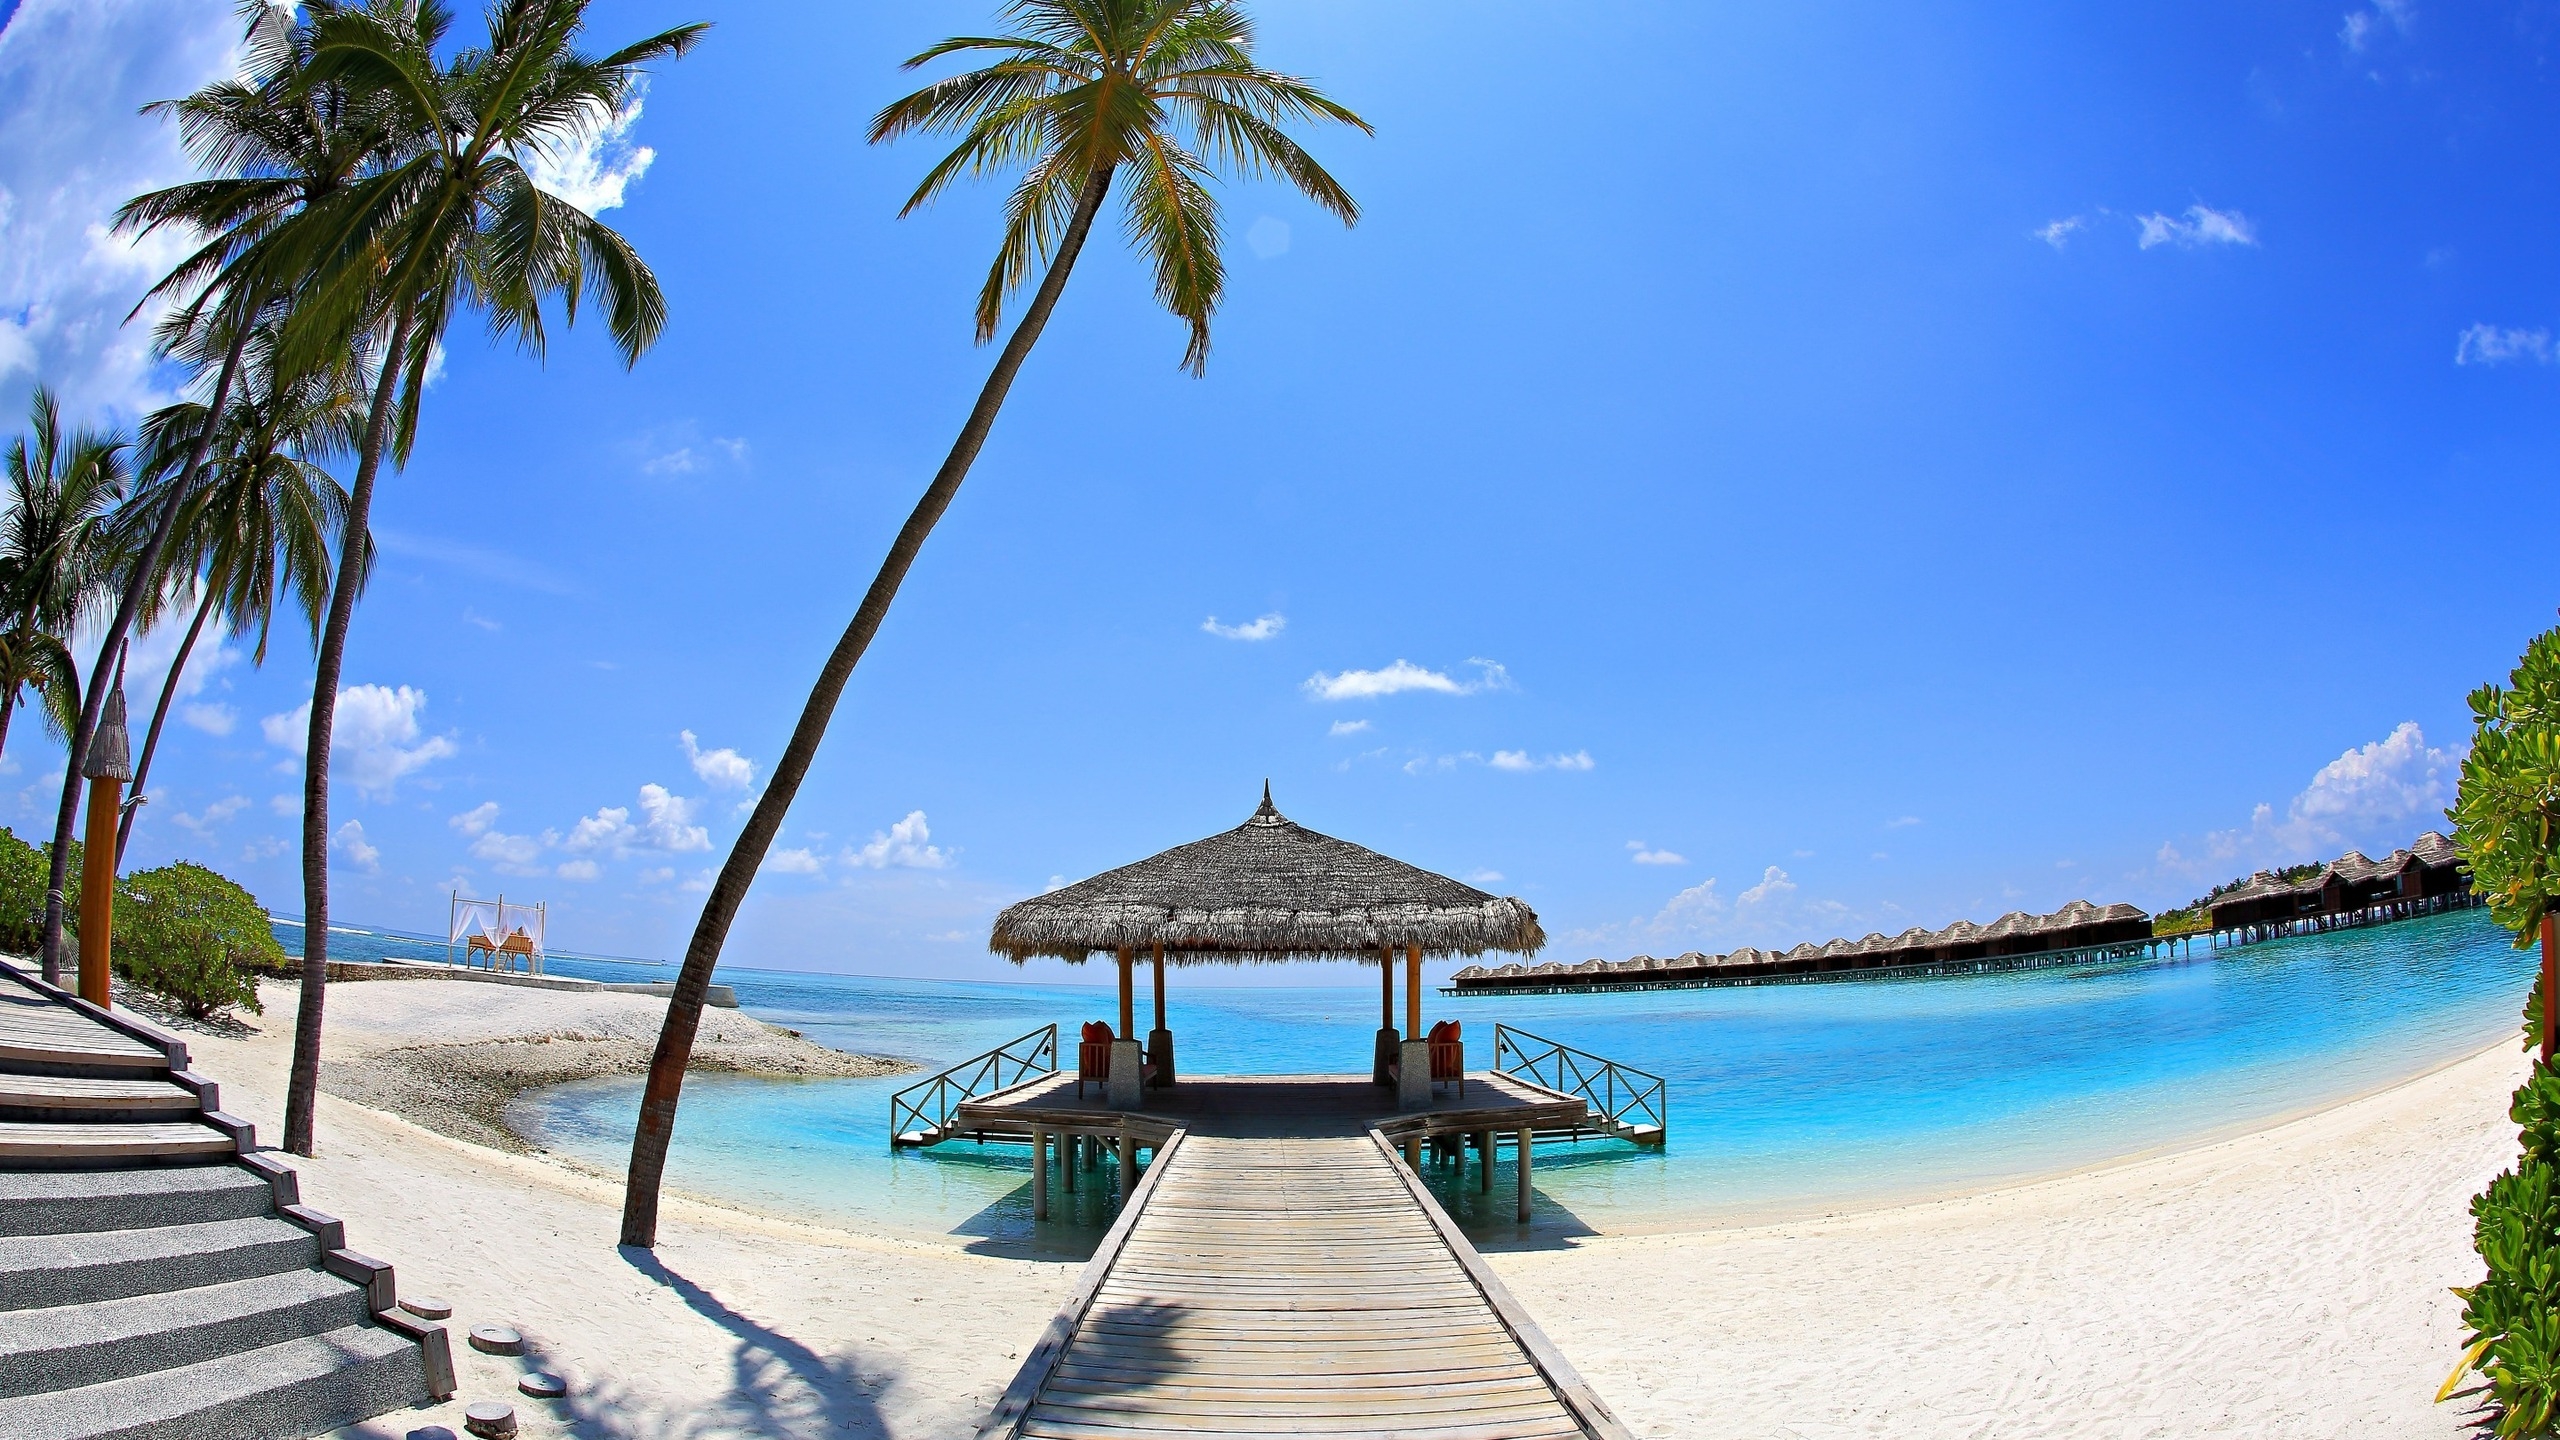 Sunny Palm Beach Corner  for 2560x1440 HDTV resolution